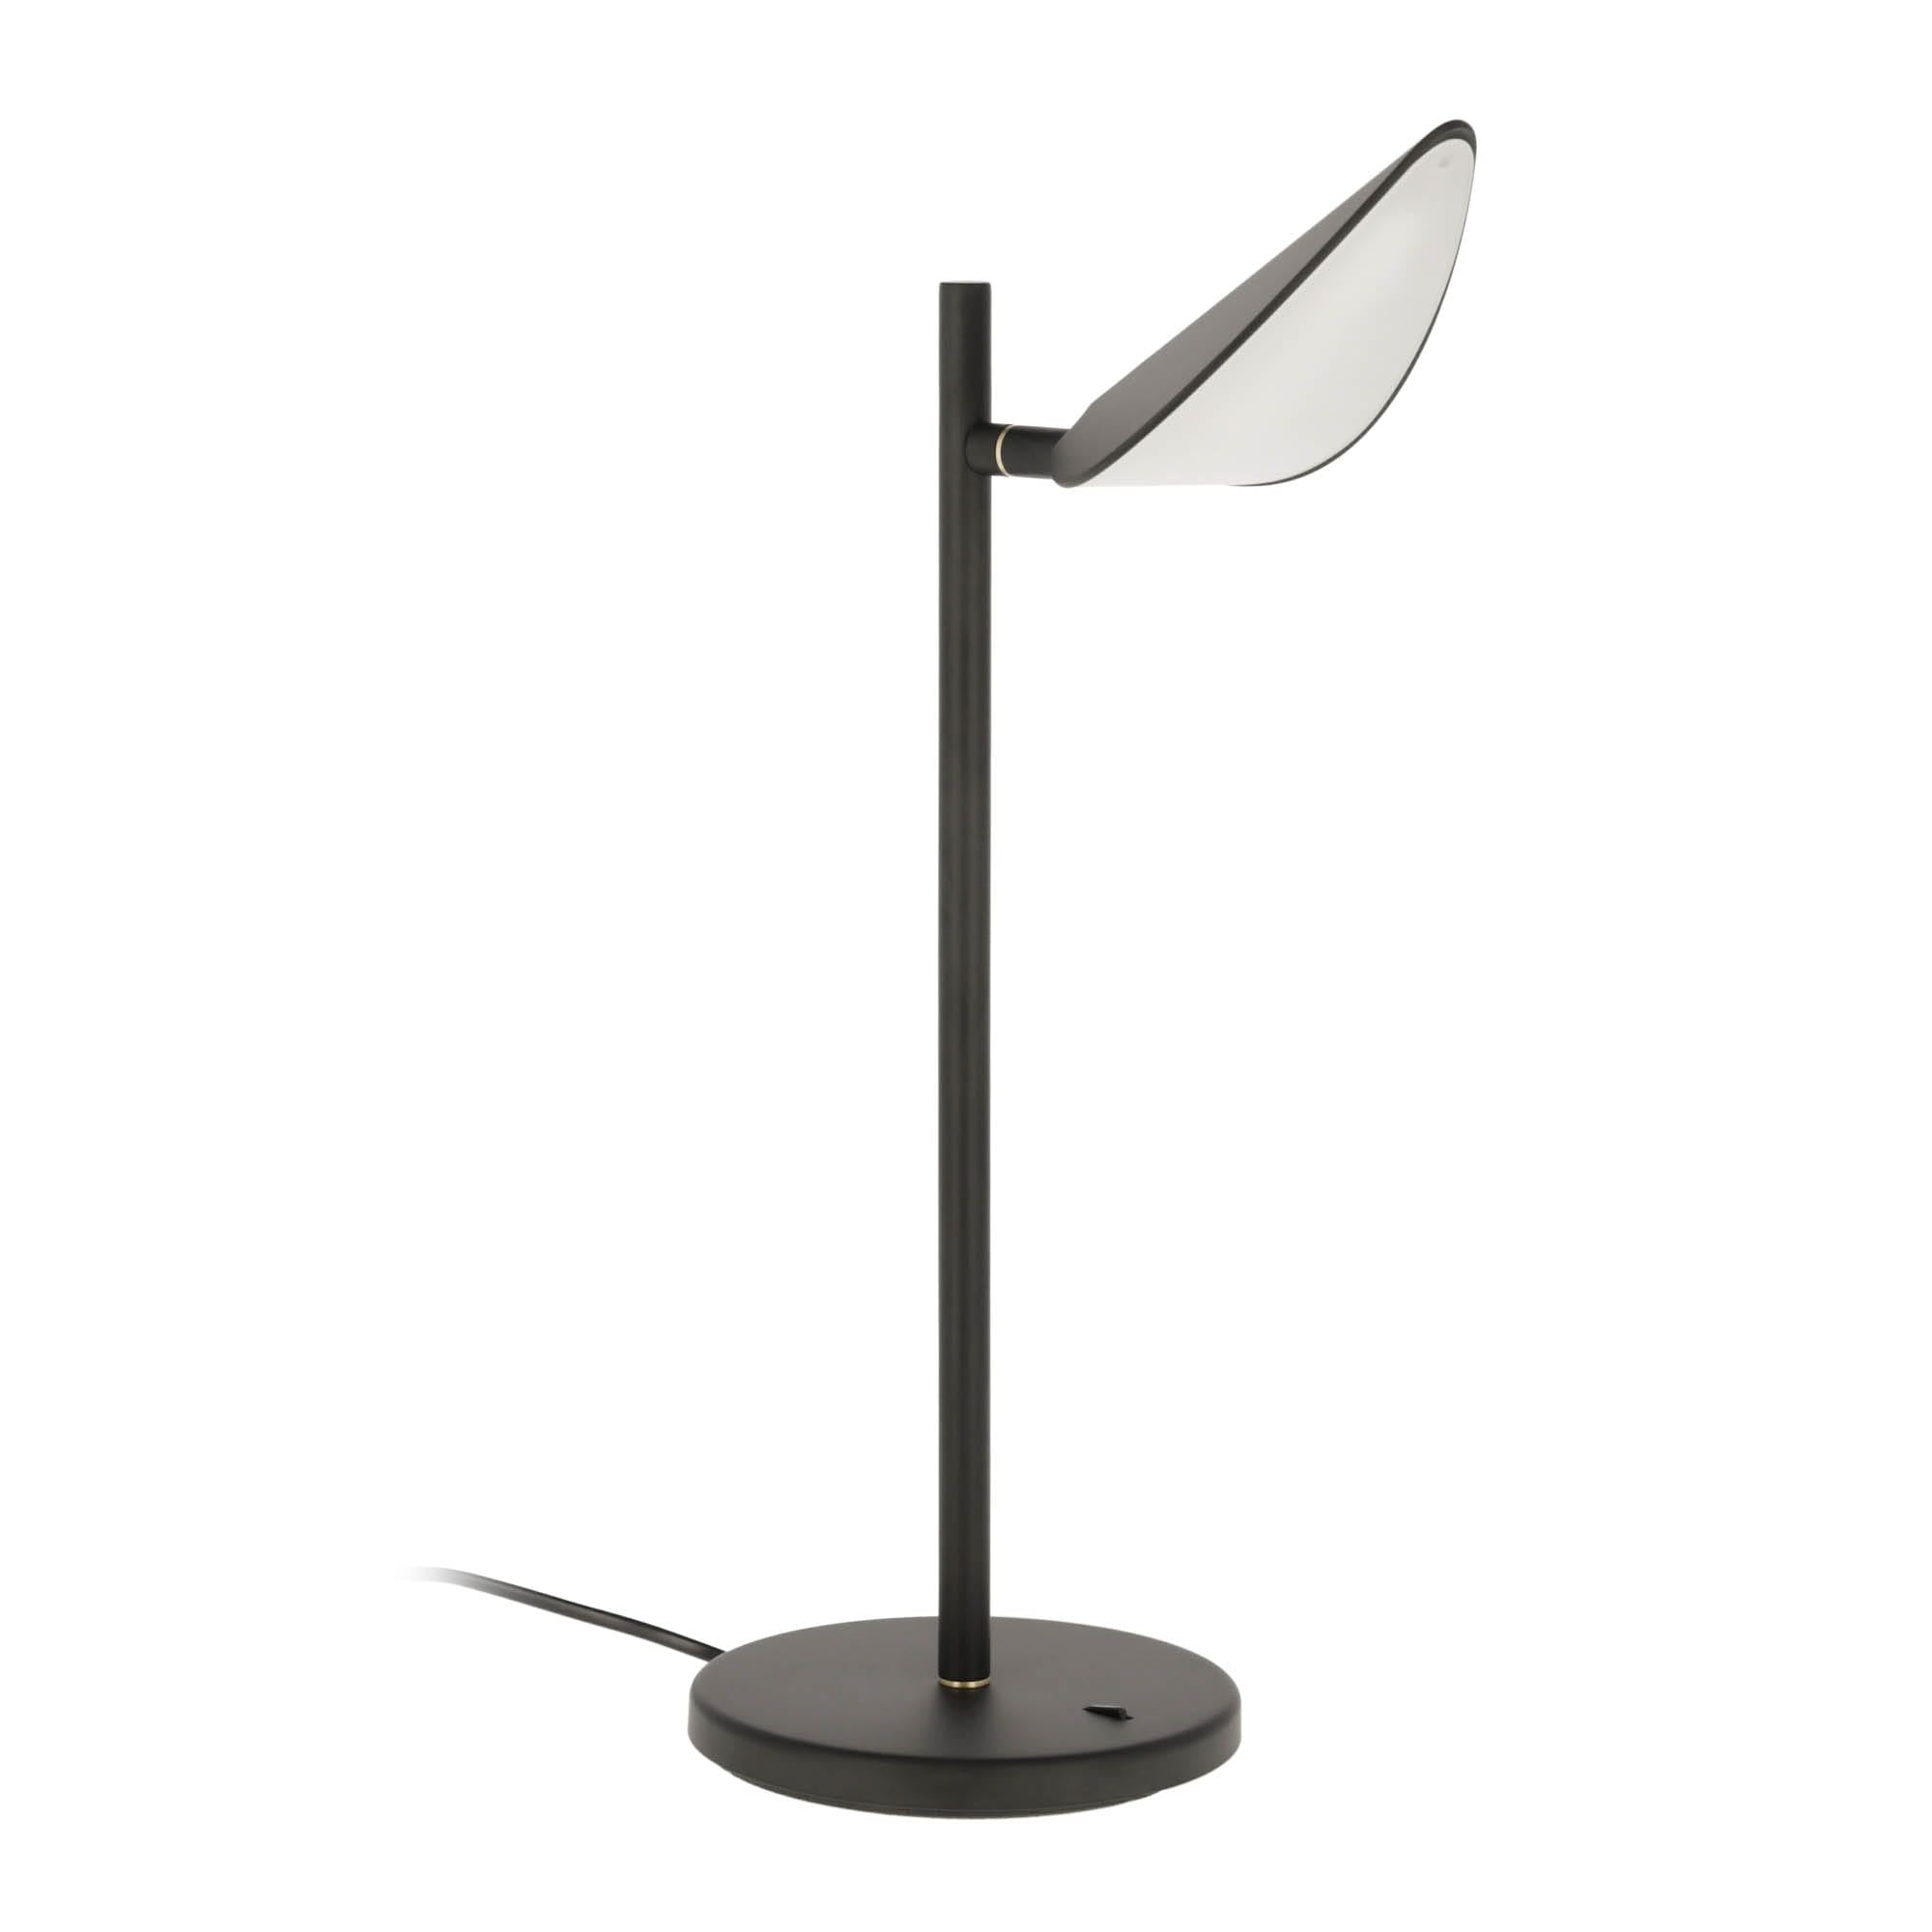 Veleira steel table lamp with UK adapter